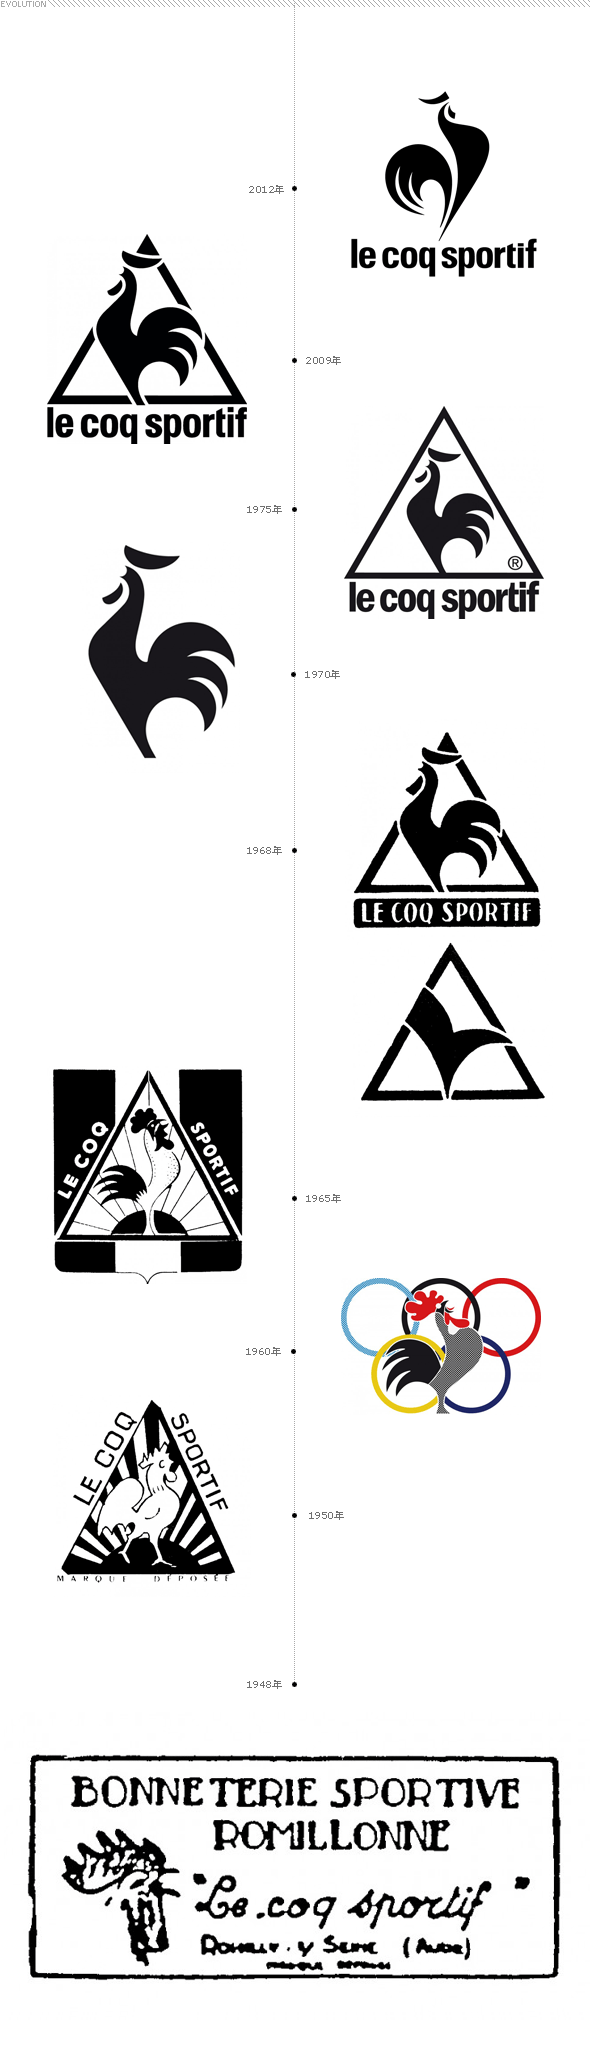 Le Coq Sportif Logo - Le Coq Sportif New Look | #corporate #branding #creative #logo ...